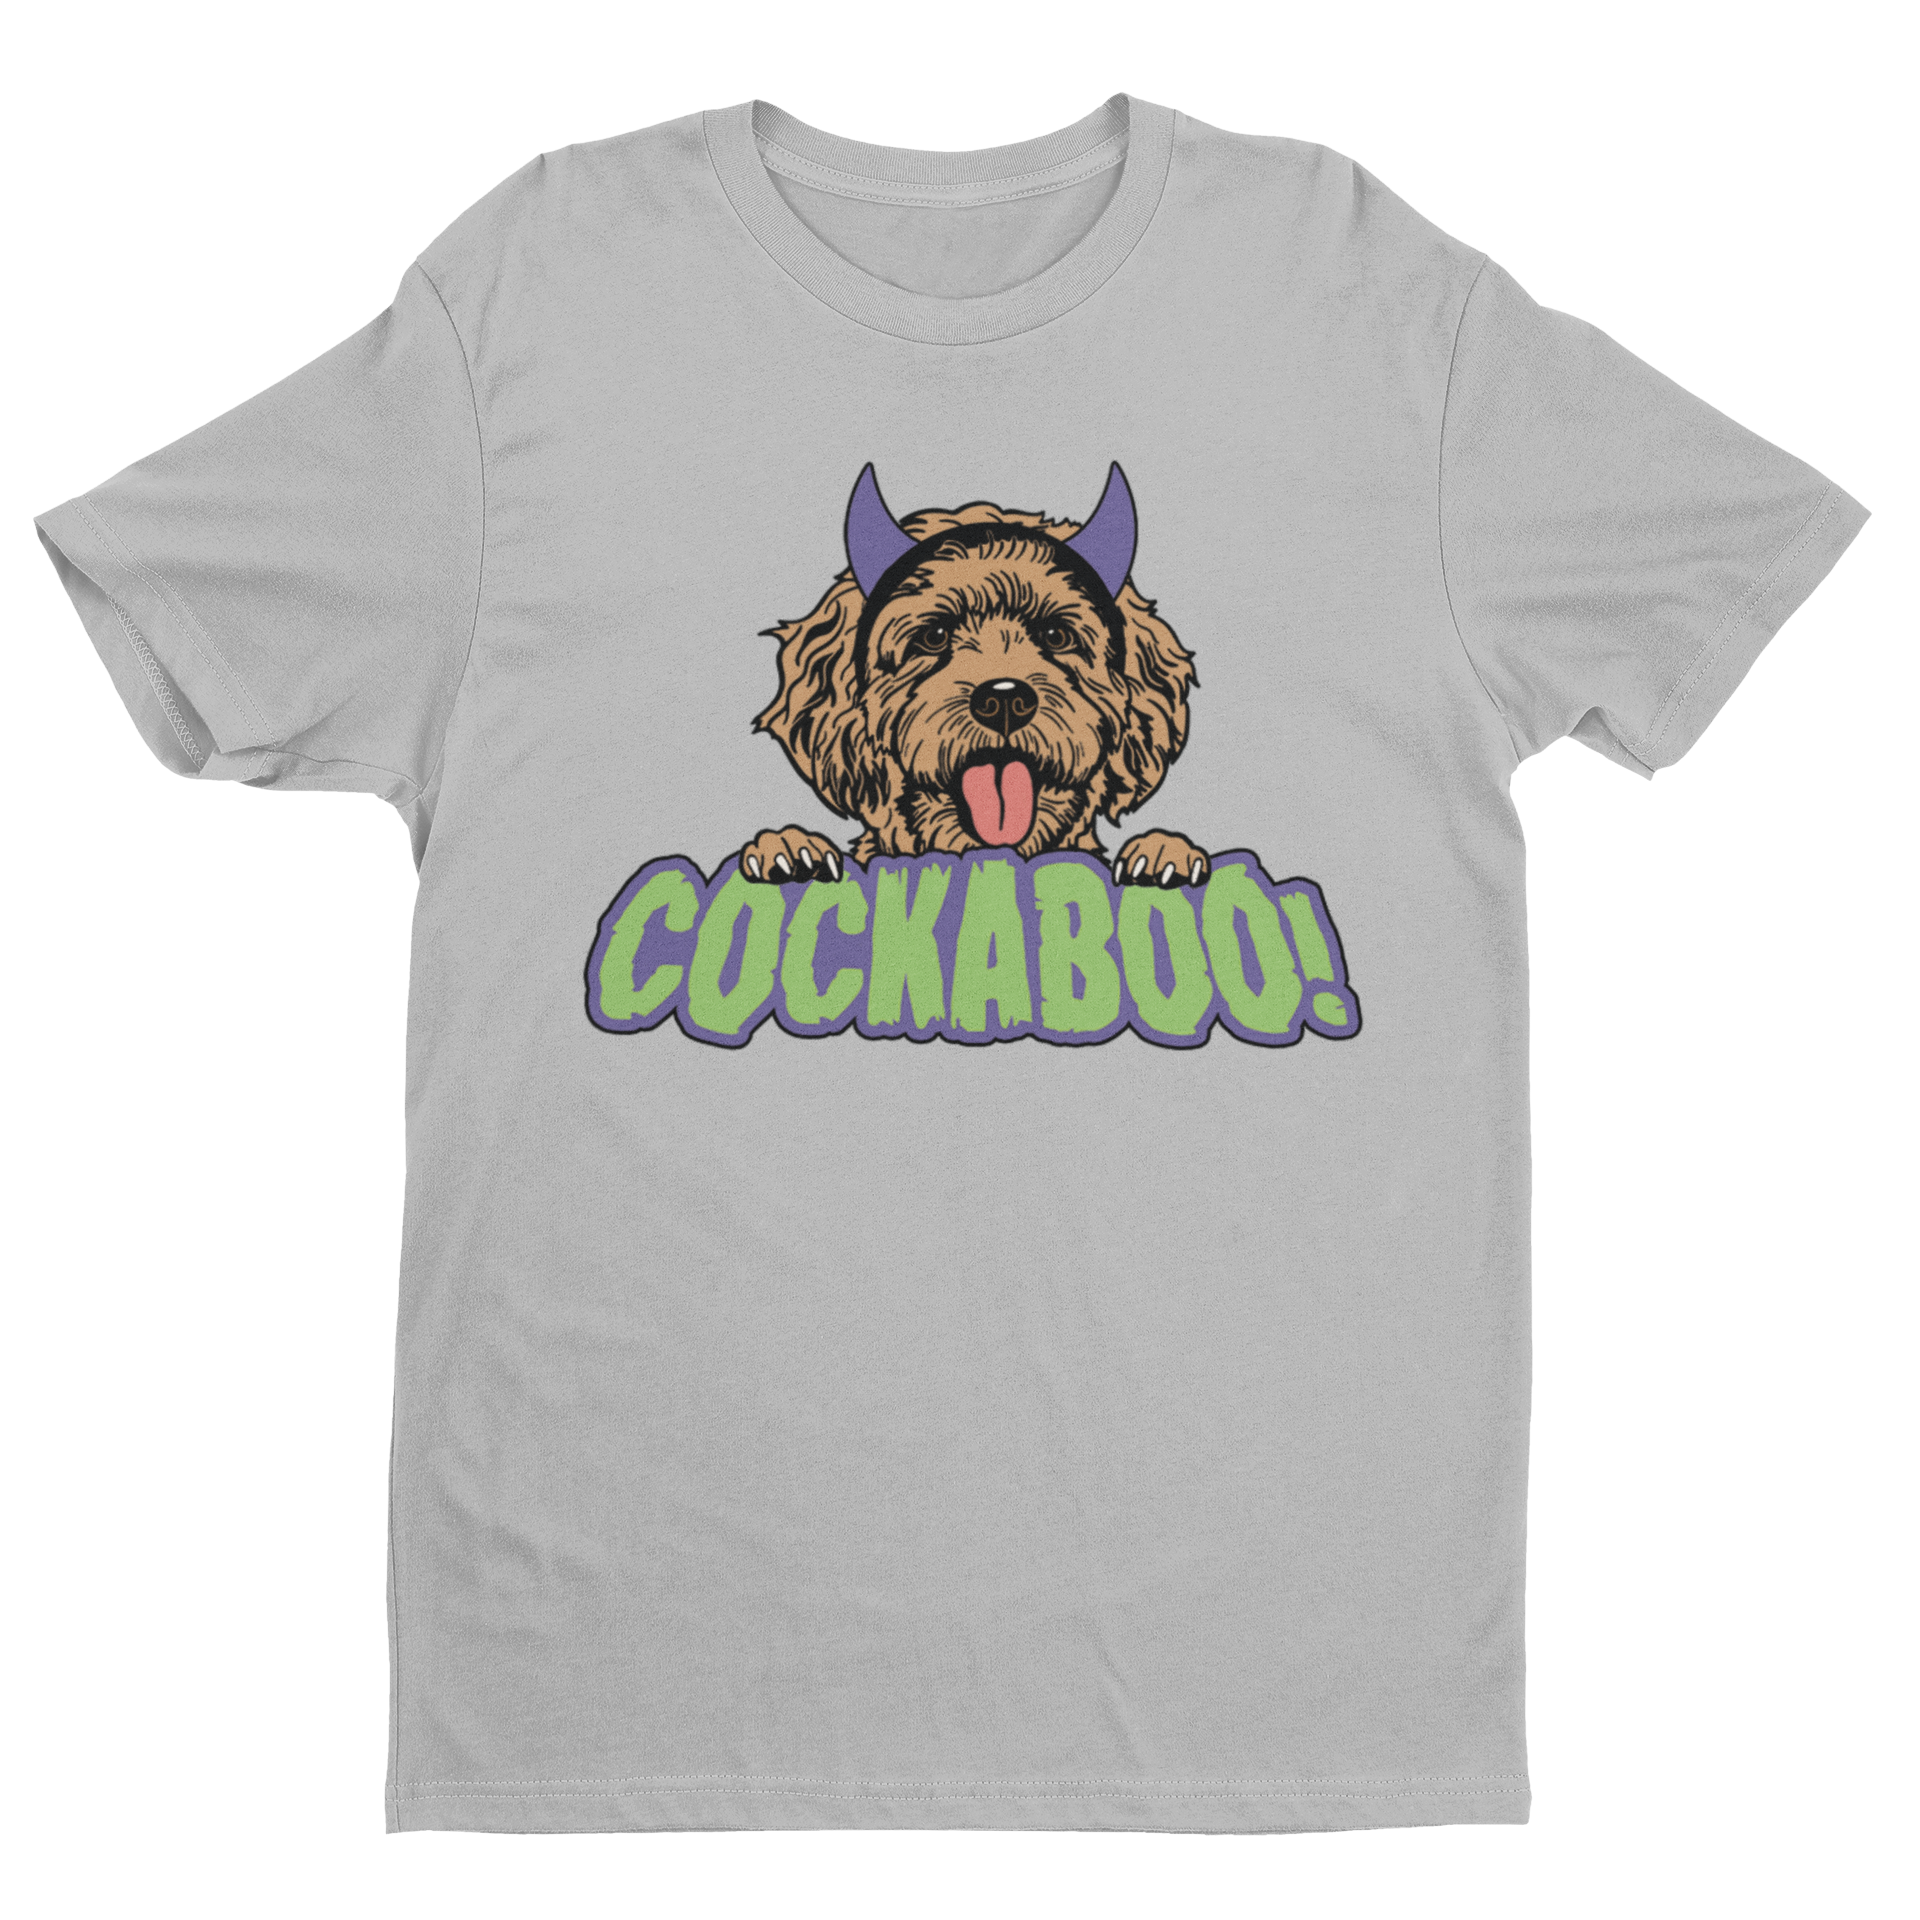 Cockaboo T Shirt